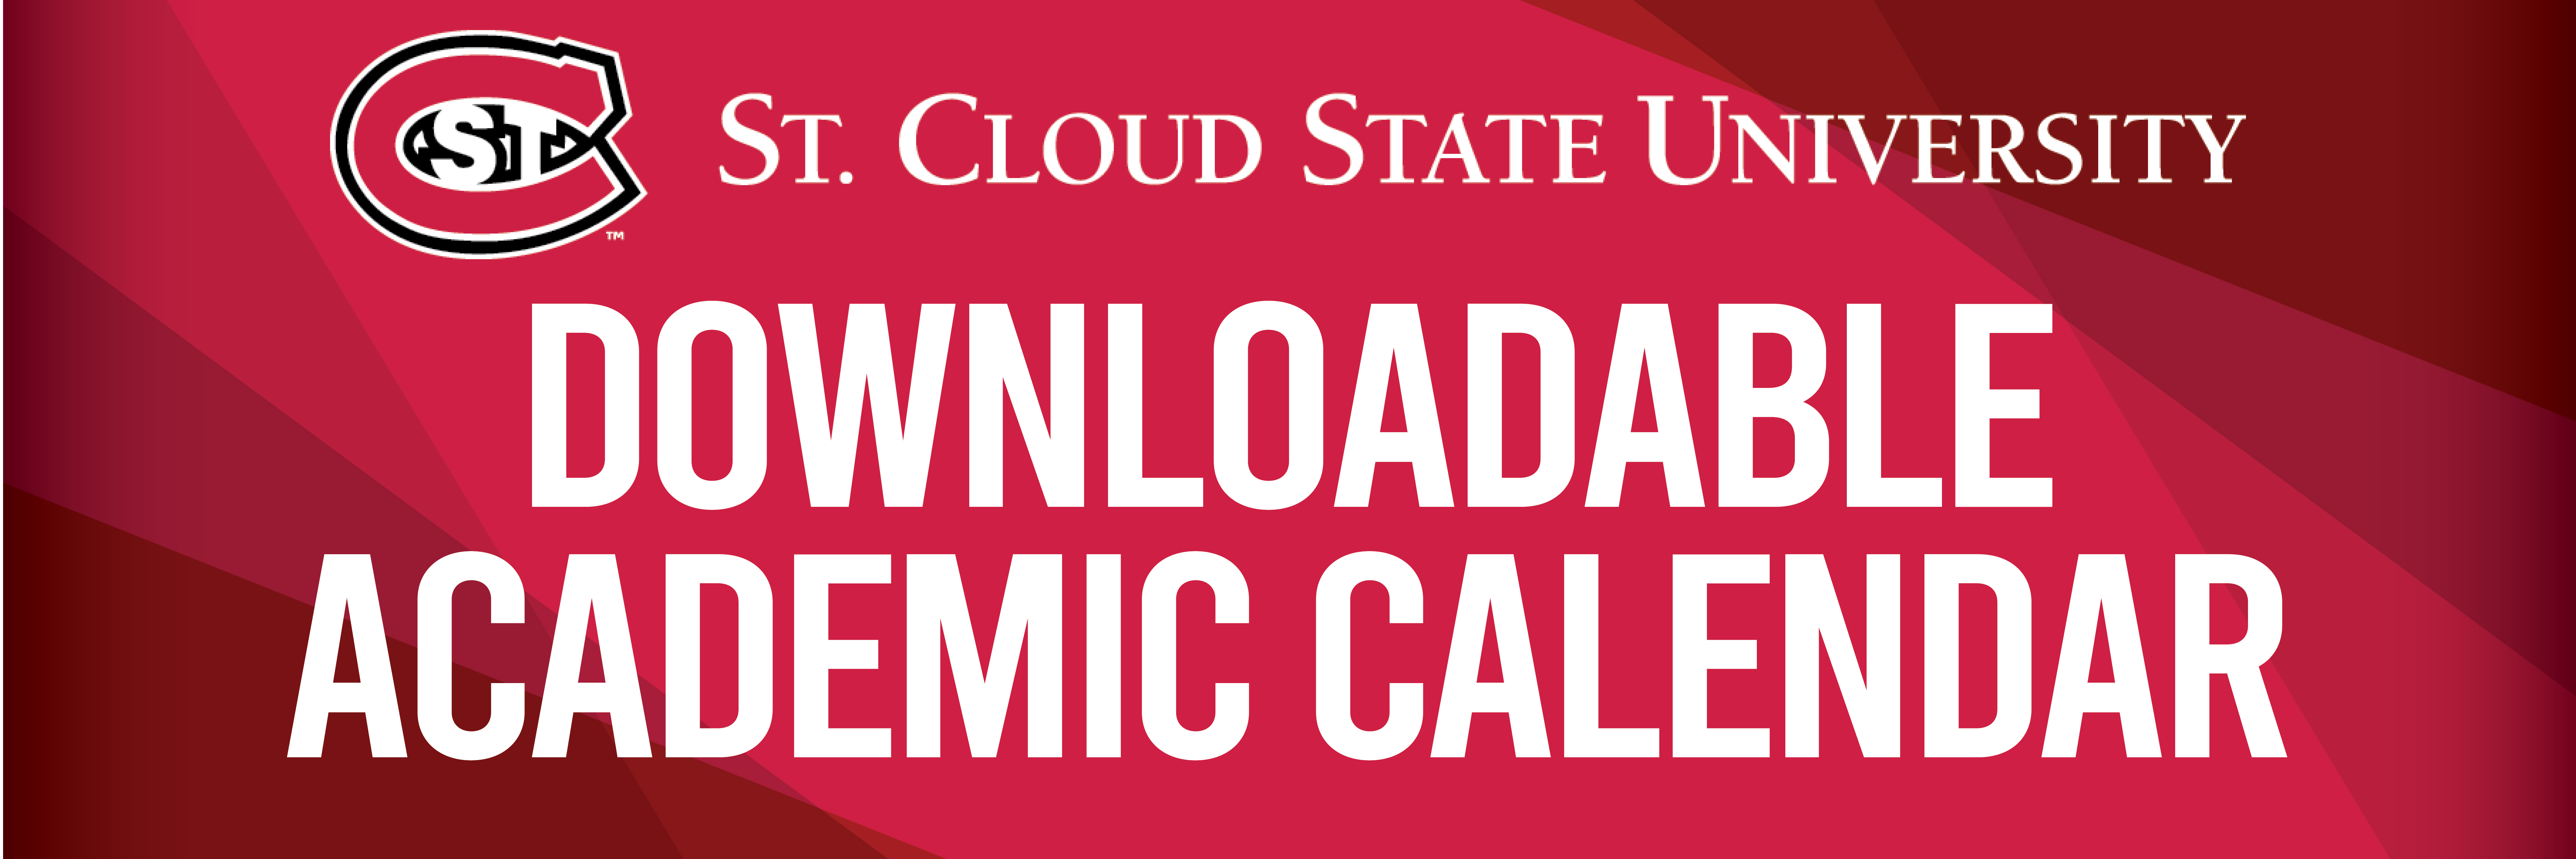 downloadable-academic-calendar-graphic.jpg